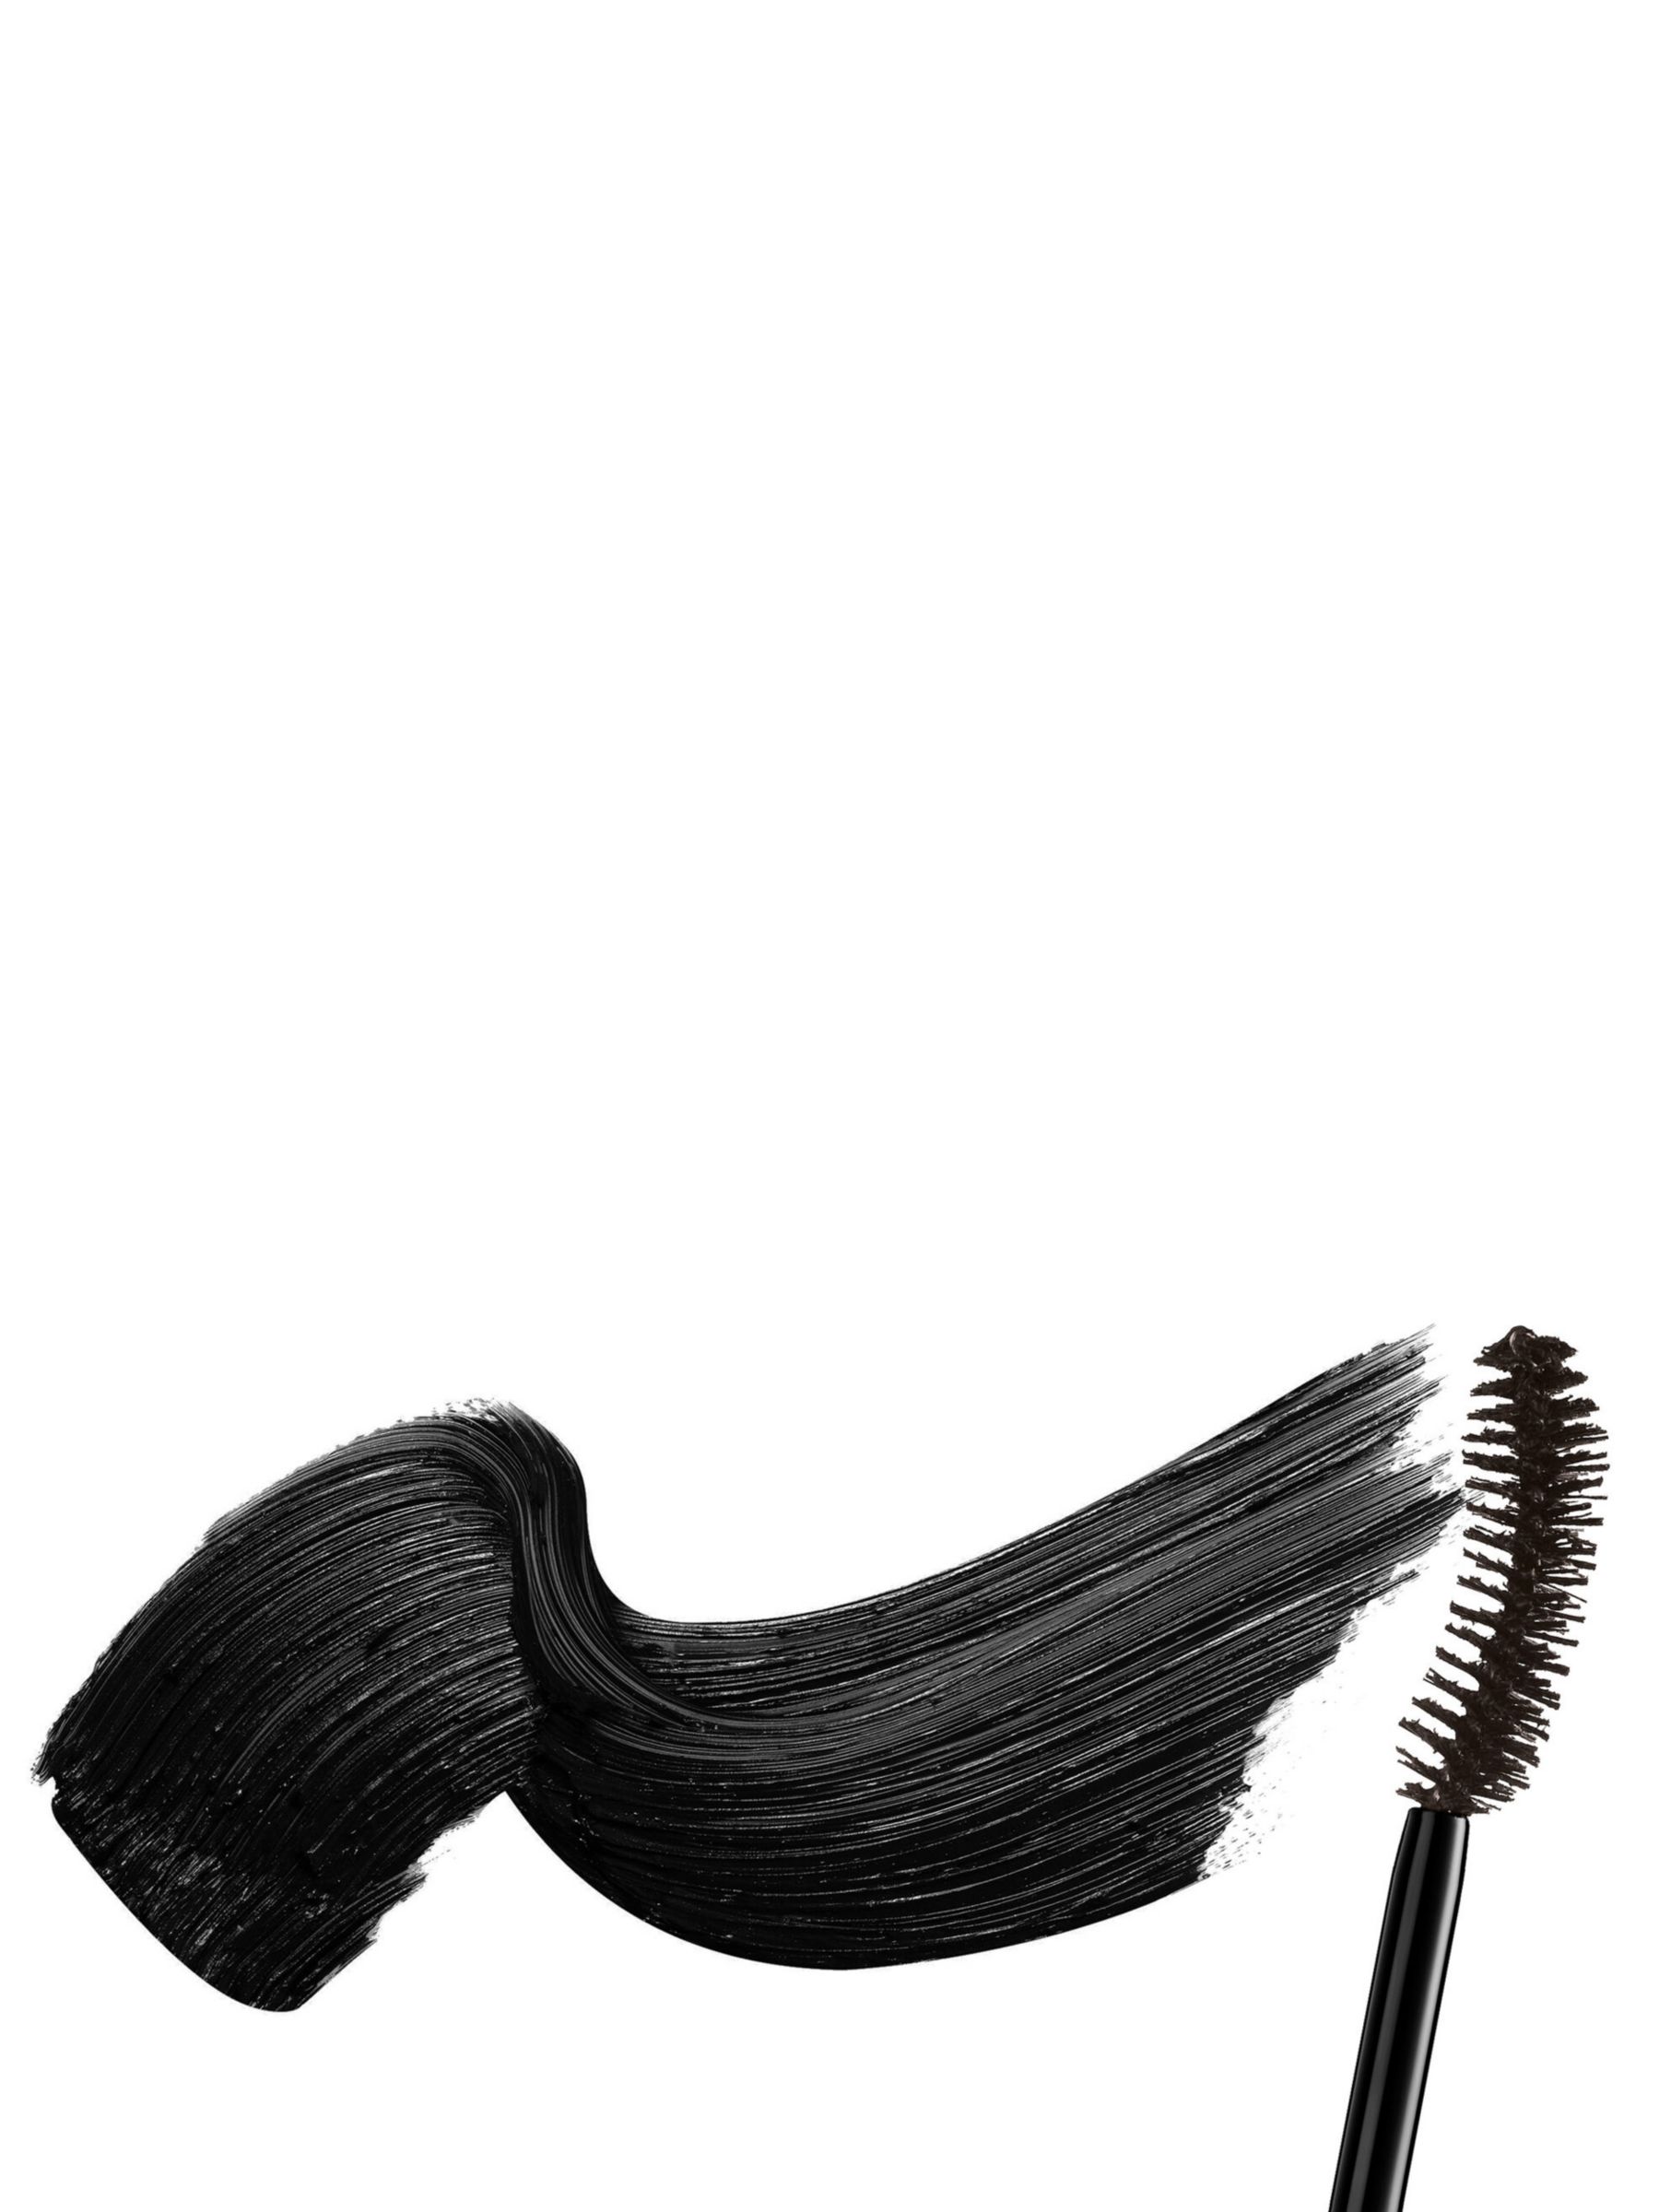 DIOR Diorshow Iconic Overcurl Mascara Refillable, 090 Black 4